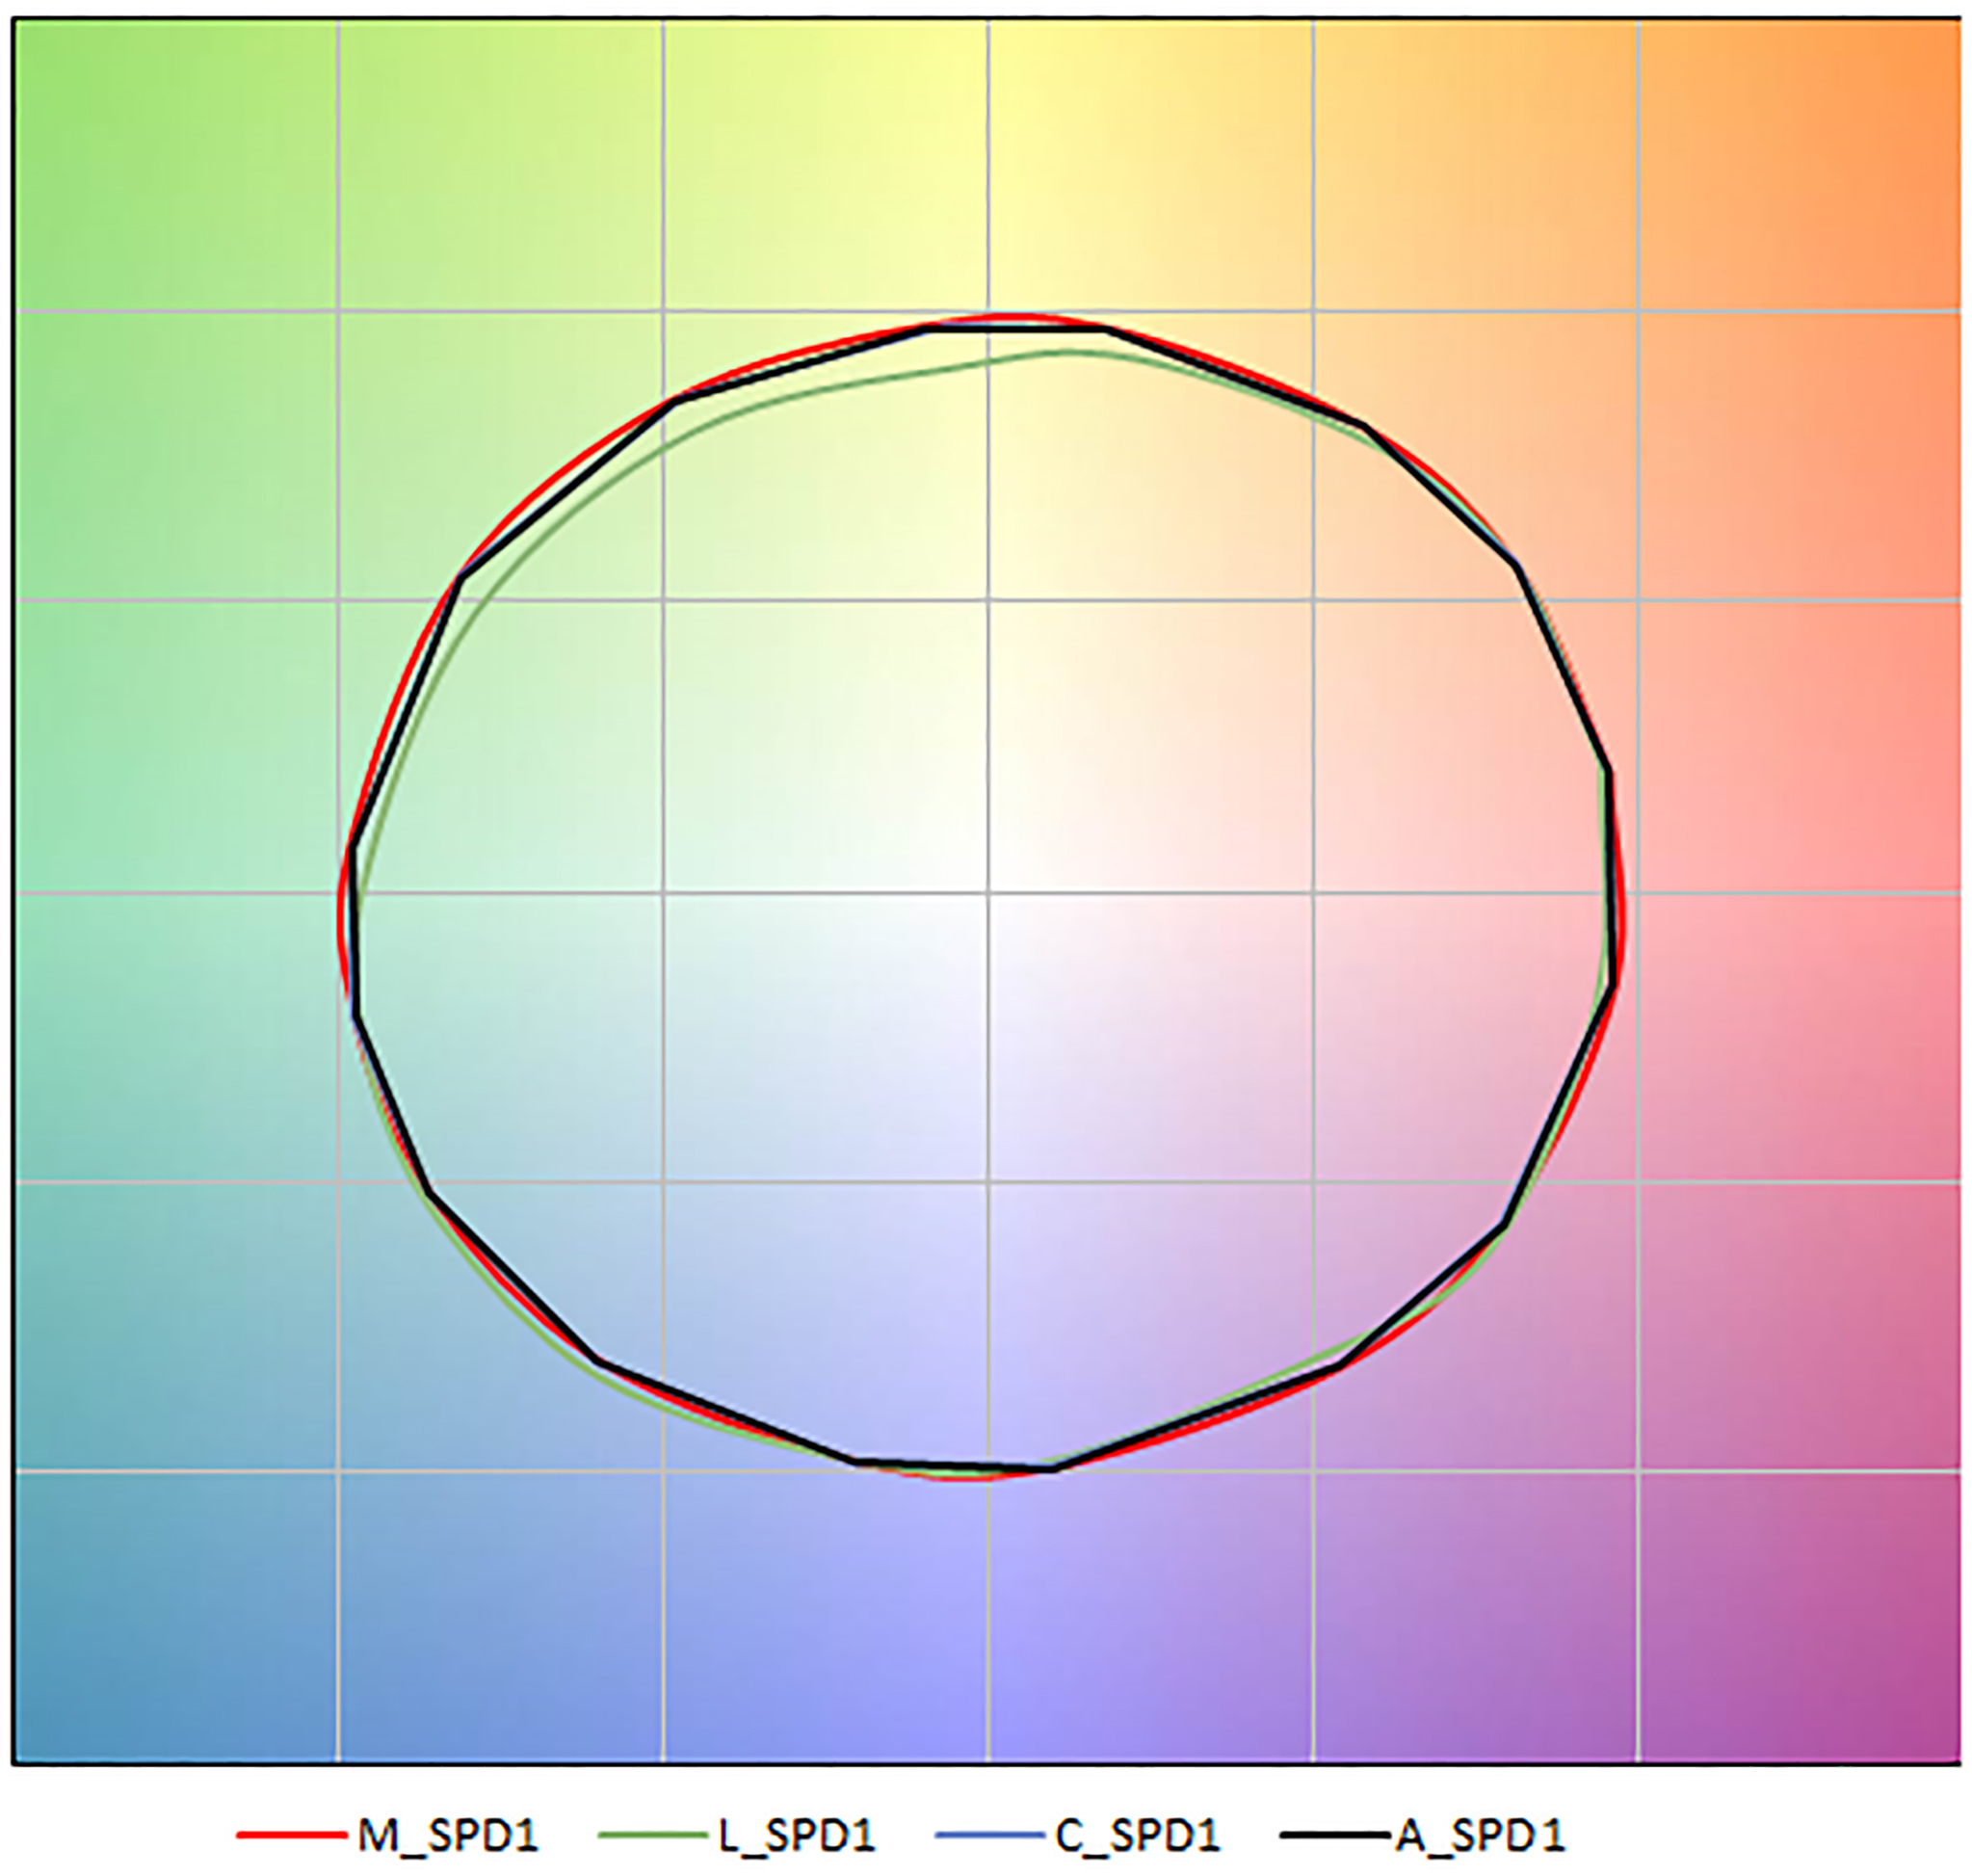 Colour vector graphic of M_SPD1, L_SPD1, C_SPD1 and A_SPD1.